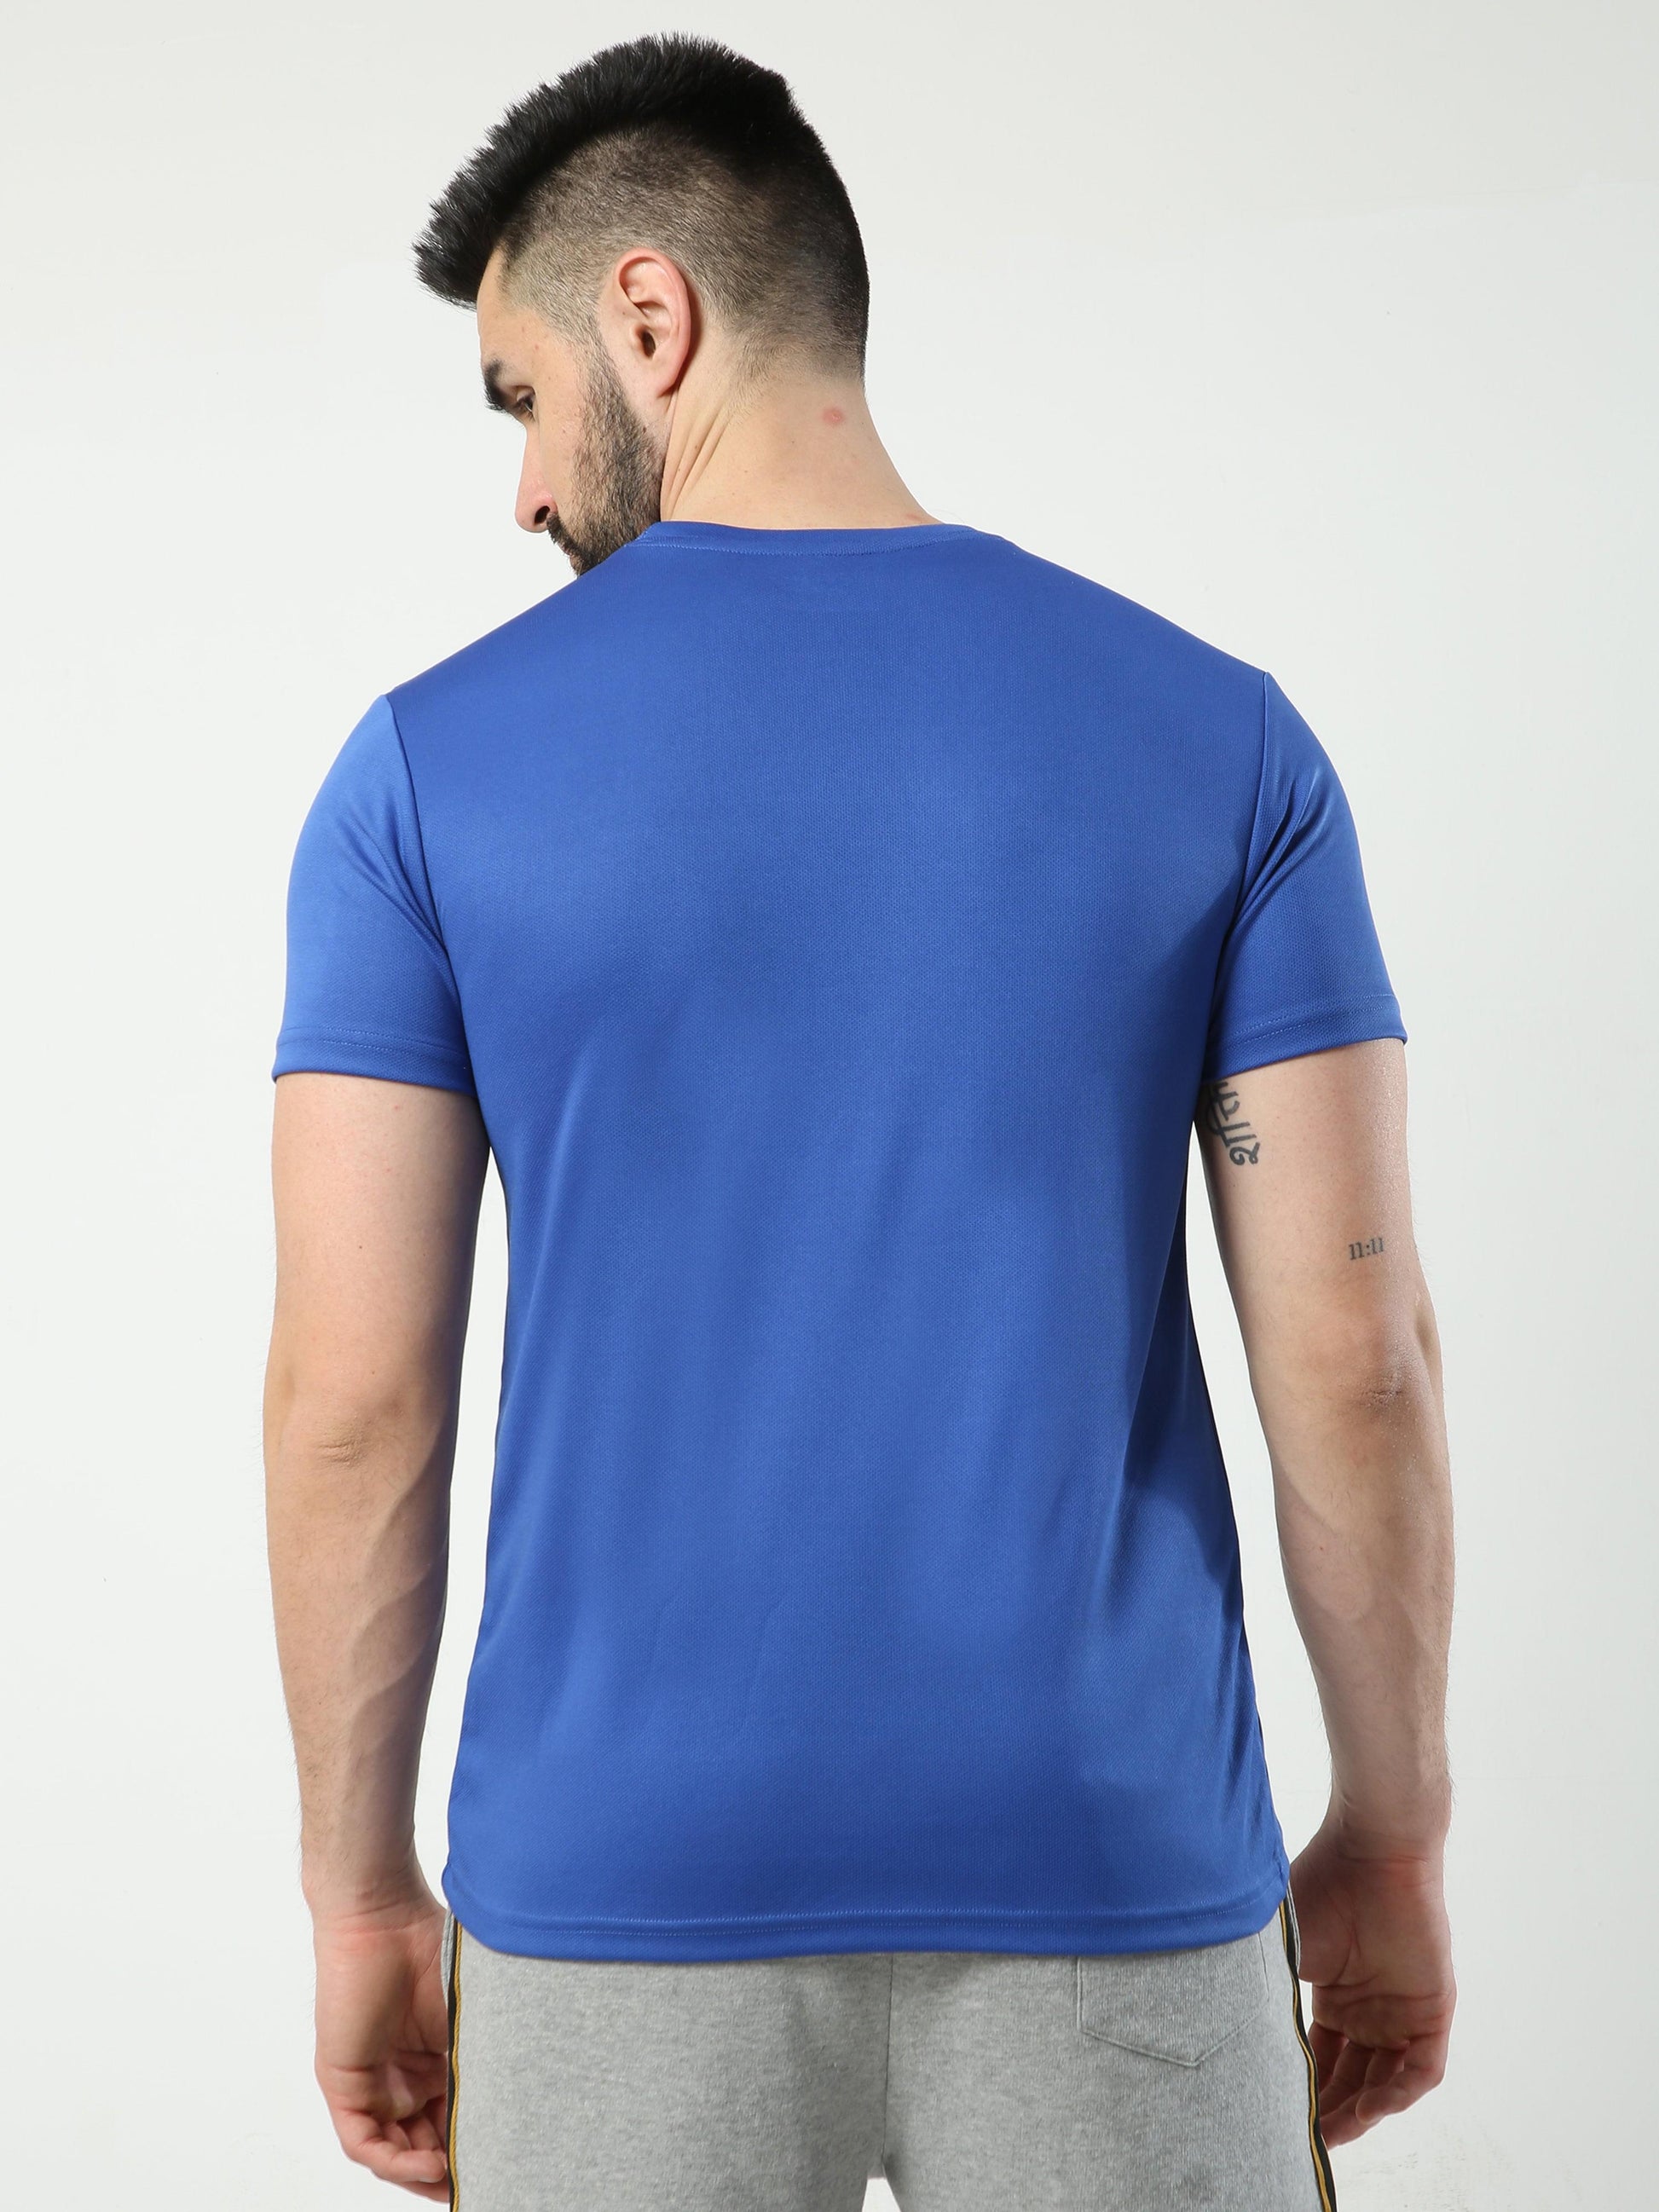 Athleisure Men's Premium T-Shirt - Royal Blue